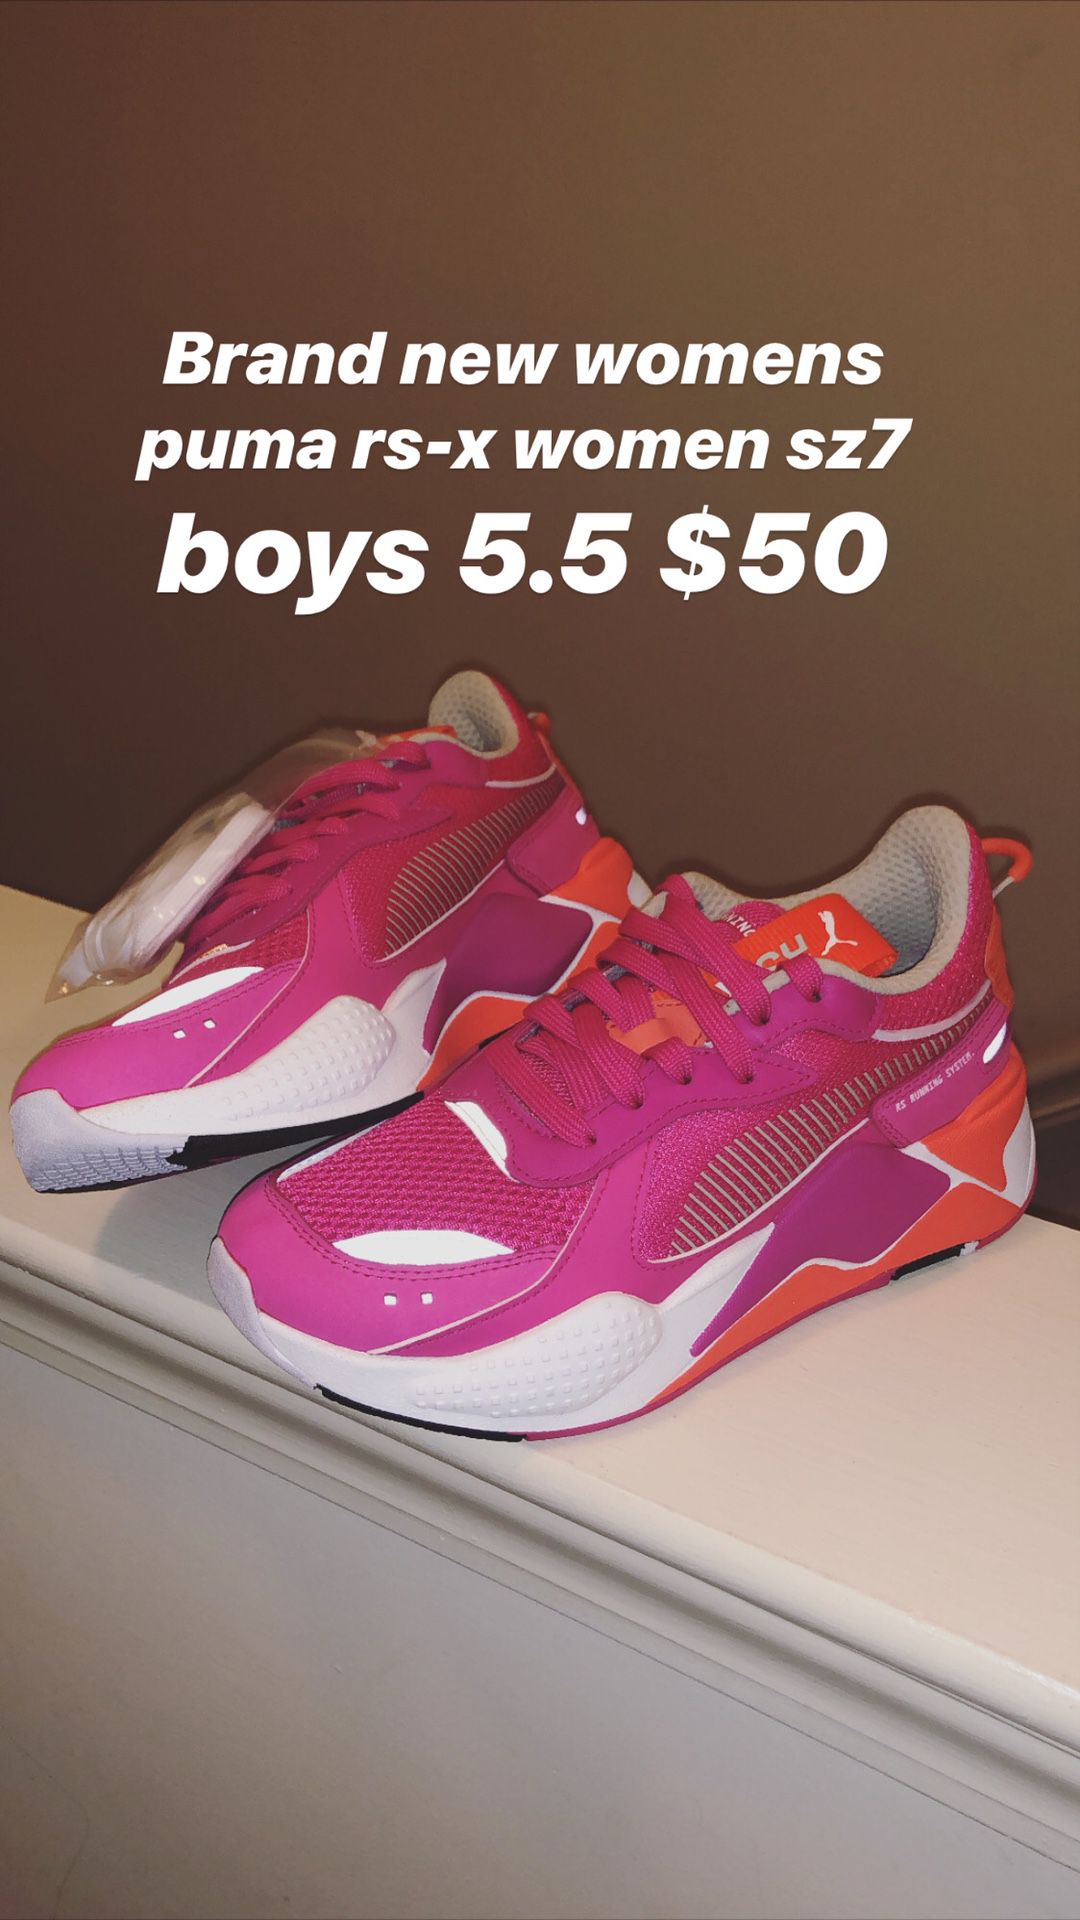 Brand new DS womens size 7 boys 5.5 puma rs-x $50